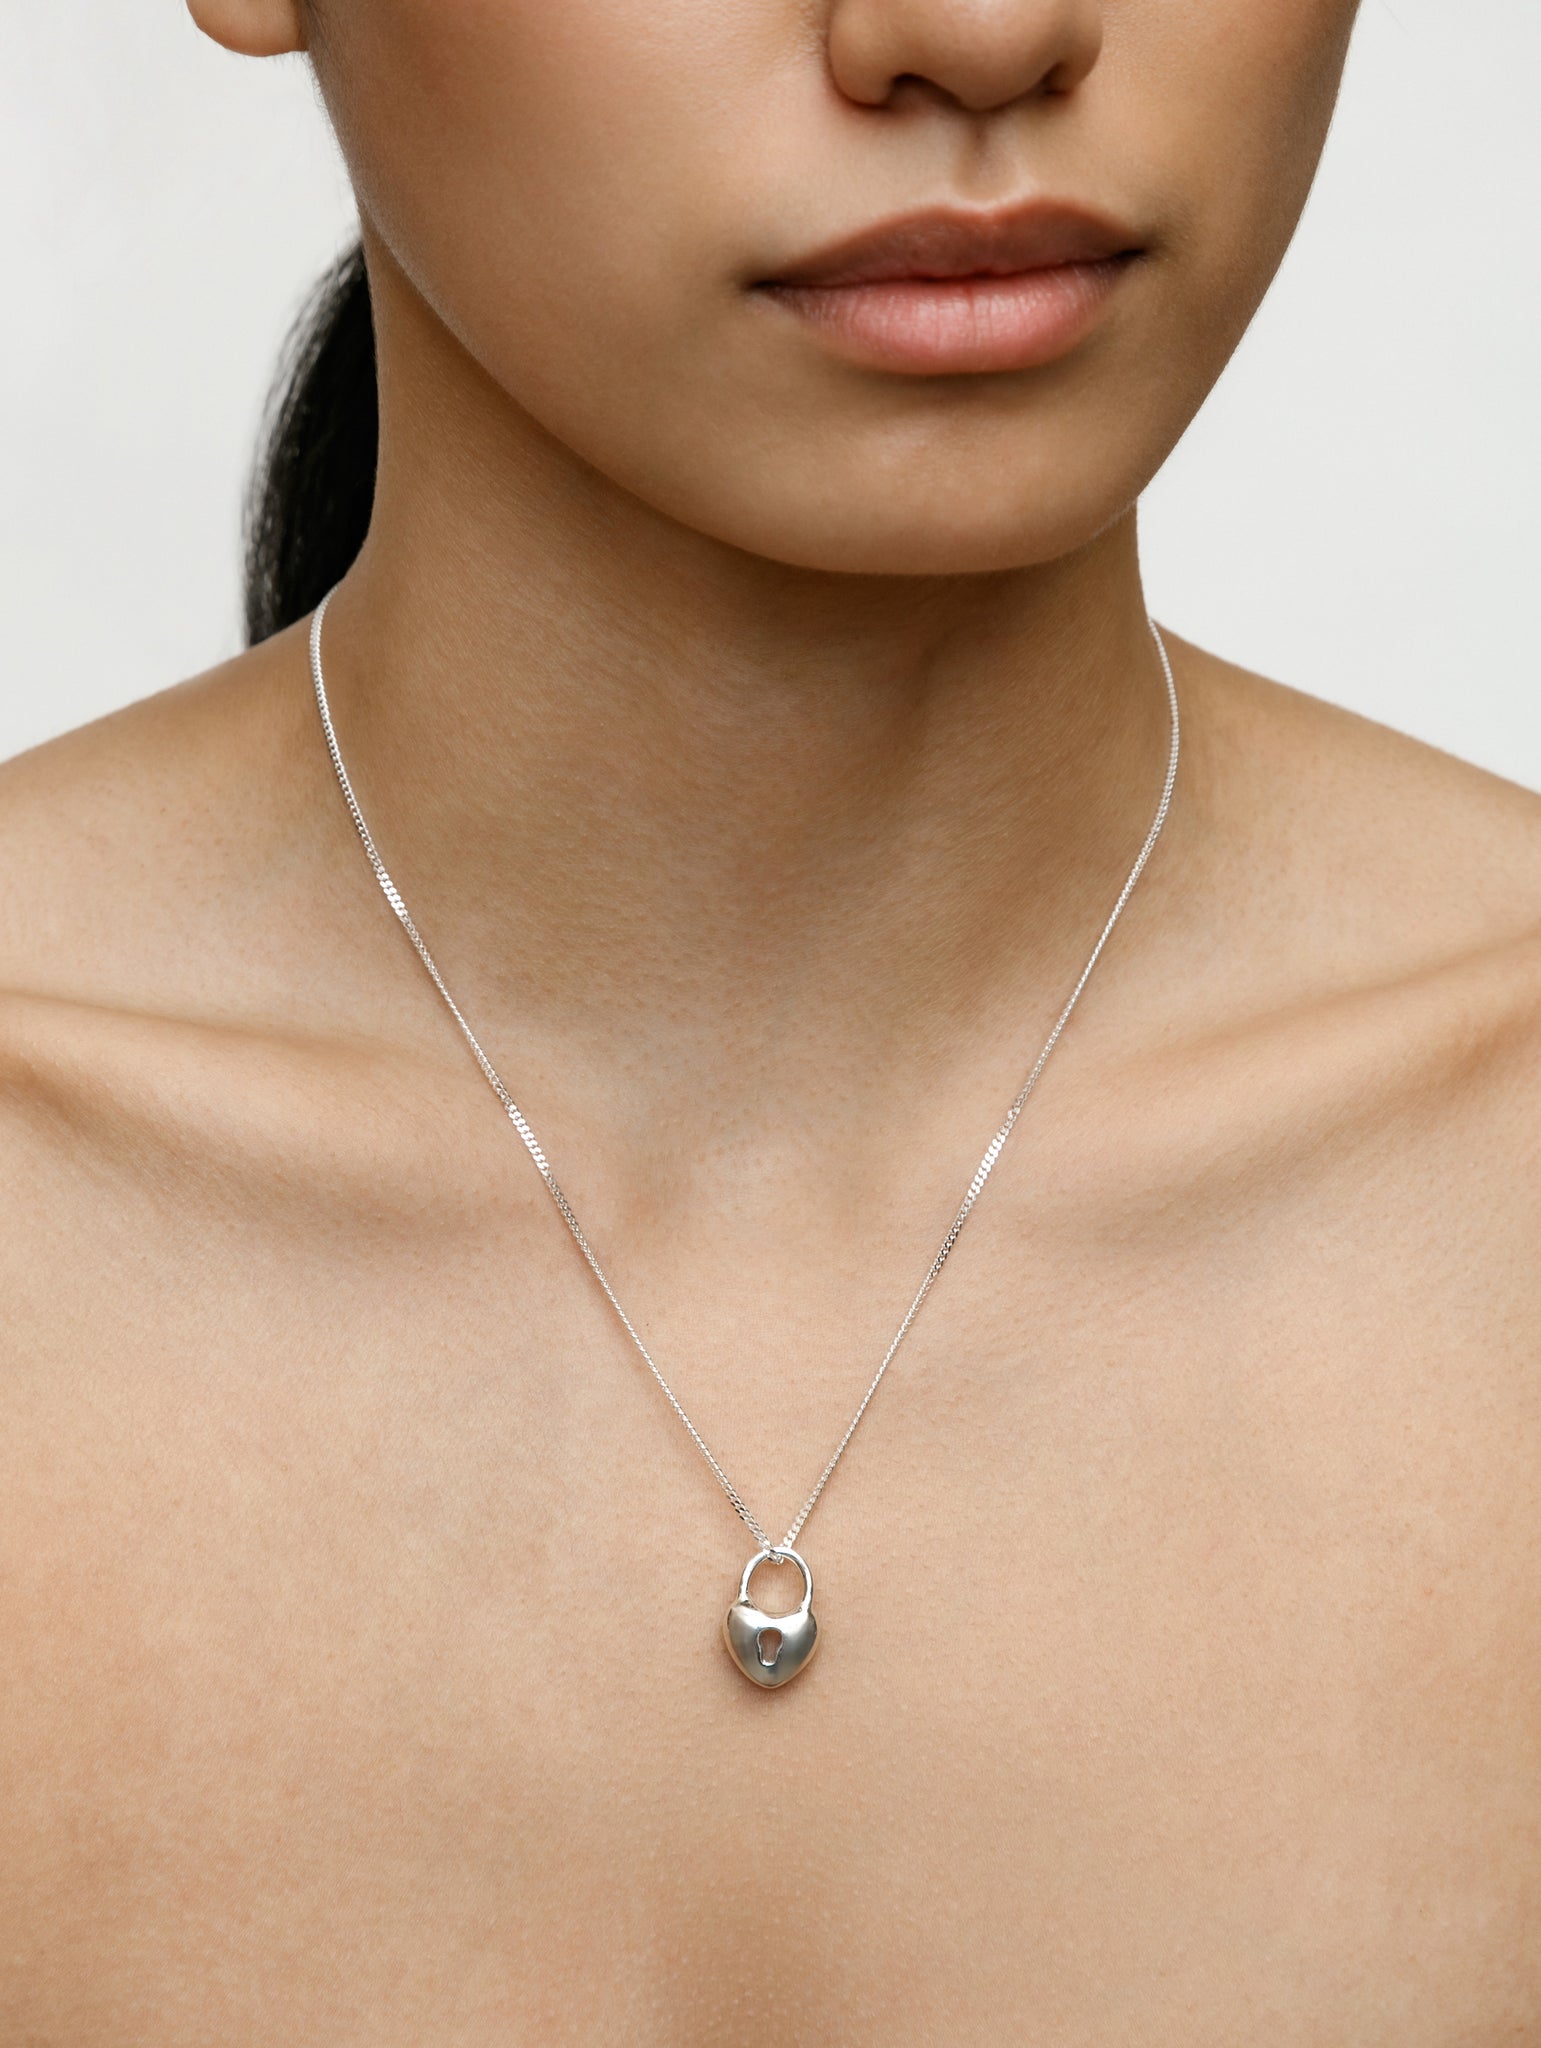 Heart Locket Necklace in Sterling Silver